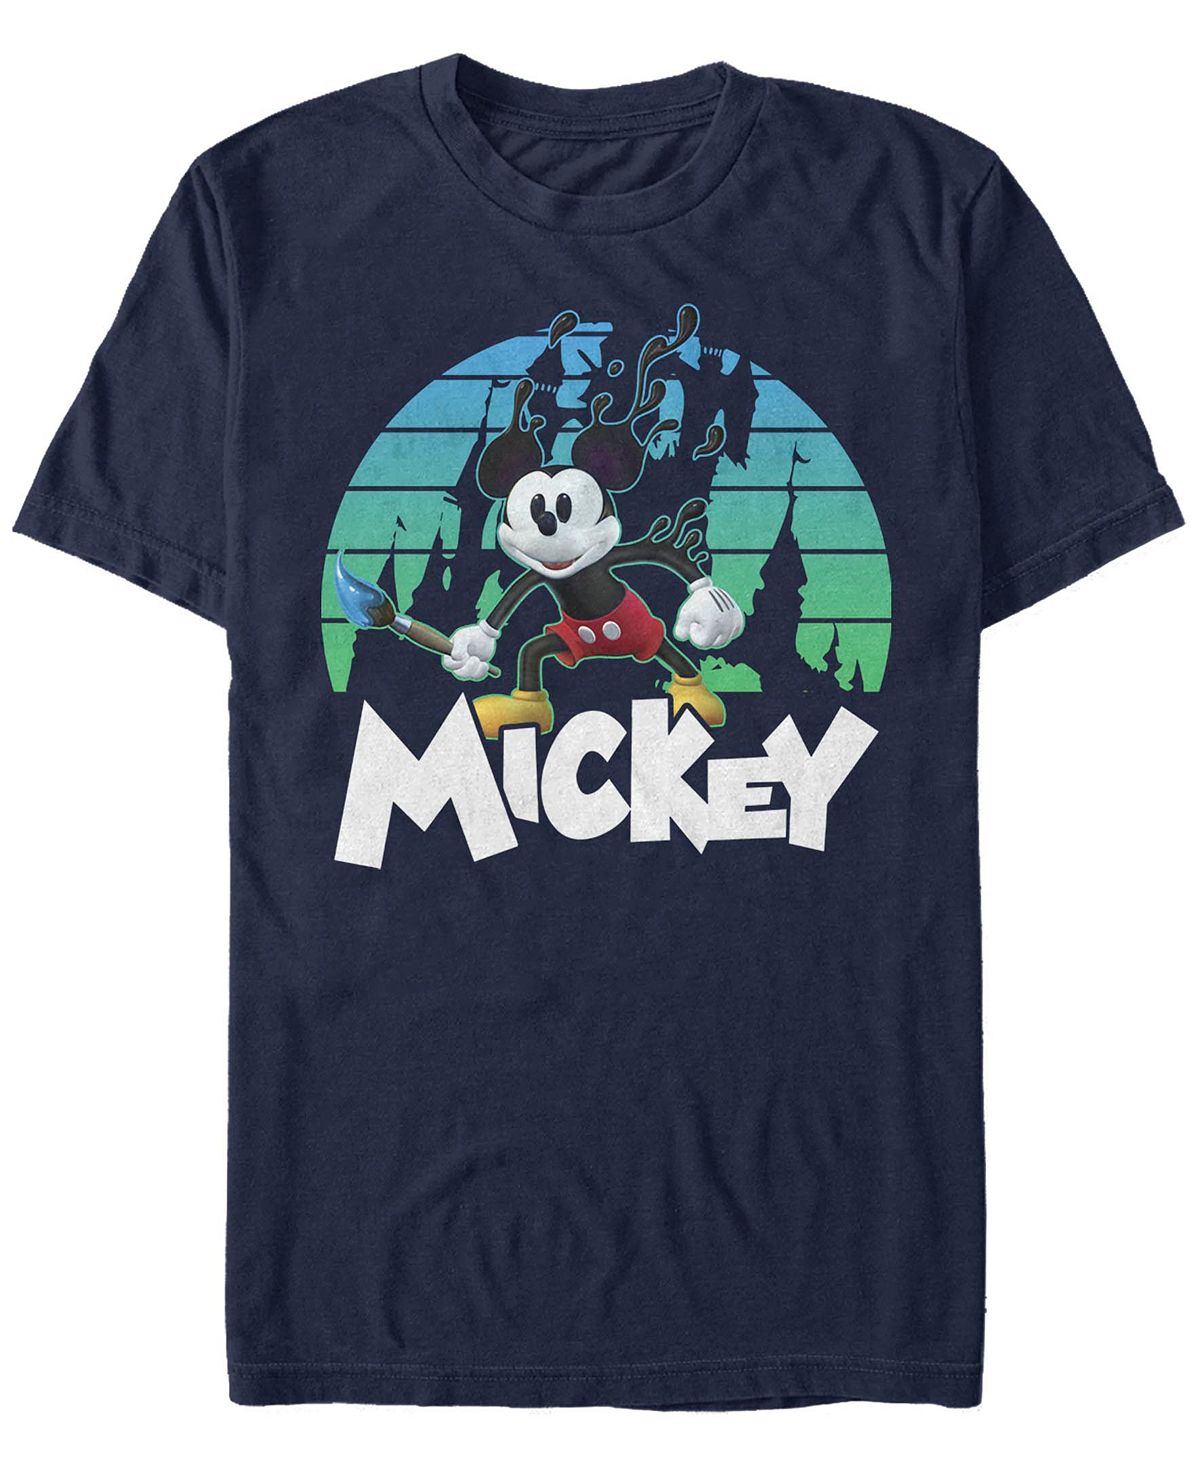 Мужская футболка с коротким рукавом epic mickey mickey retro sunset Fifth Sun, синий мужская футболка с длинными рукавами mickey classic vampire mickey fifth sun